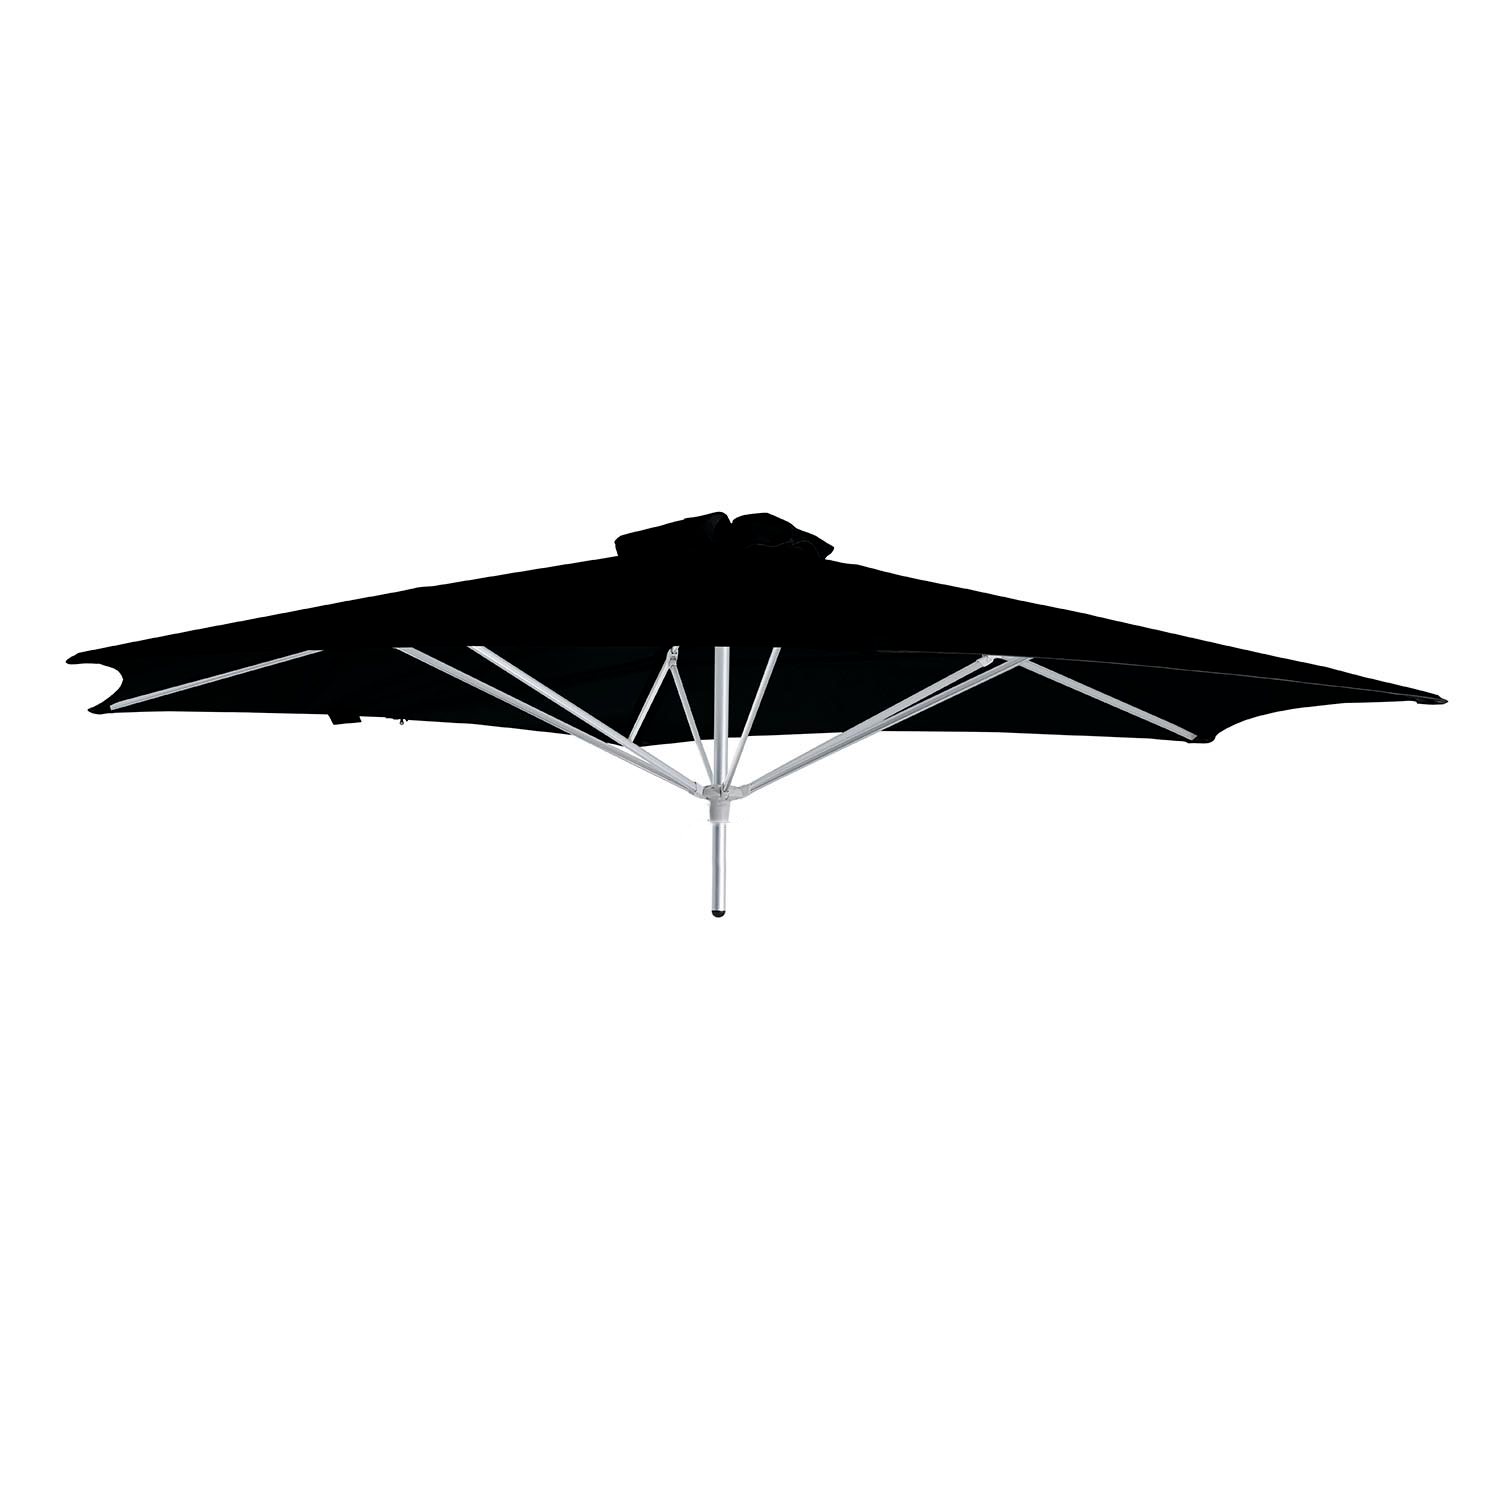 Paraflex Classic parasolkap 270cm - Sunbrella (Black)